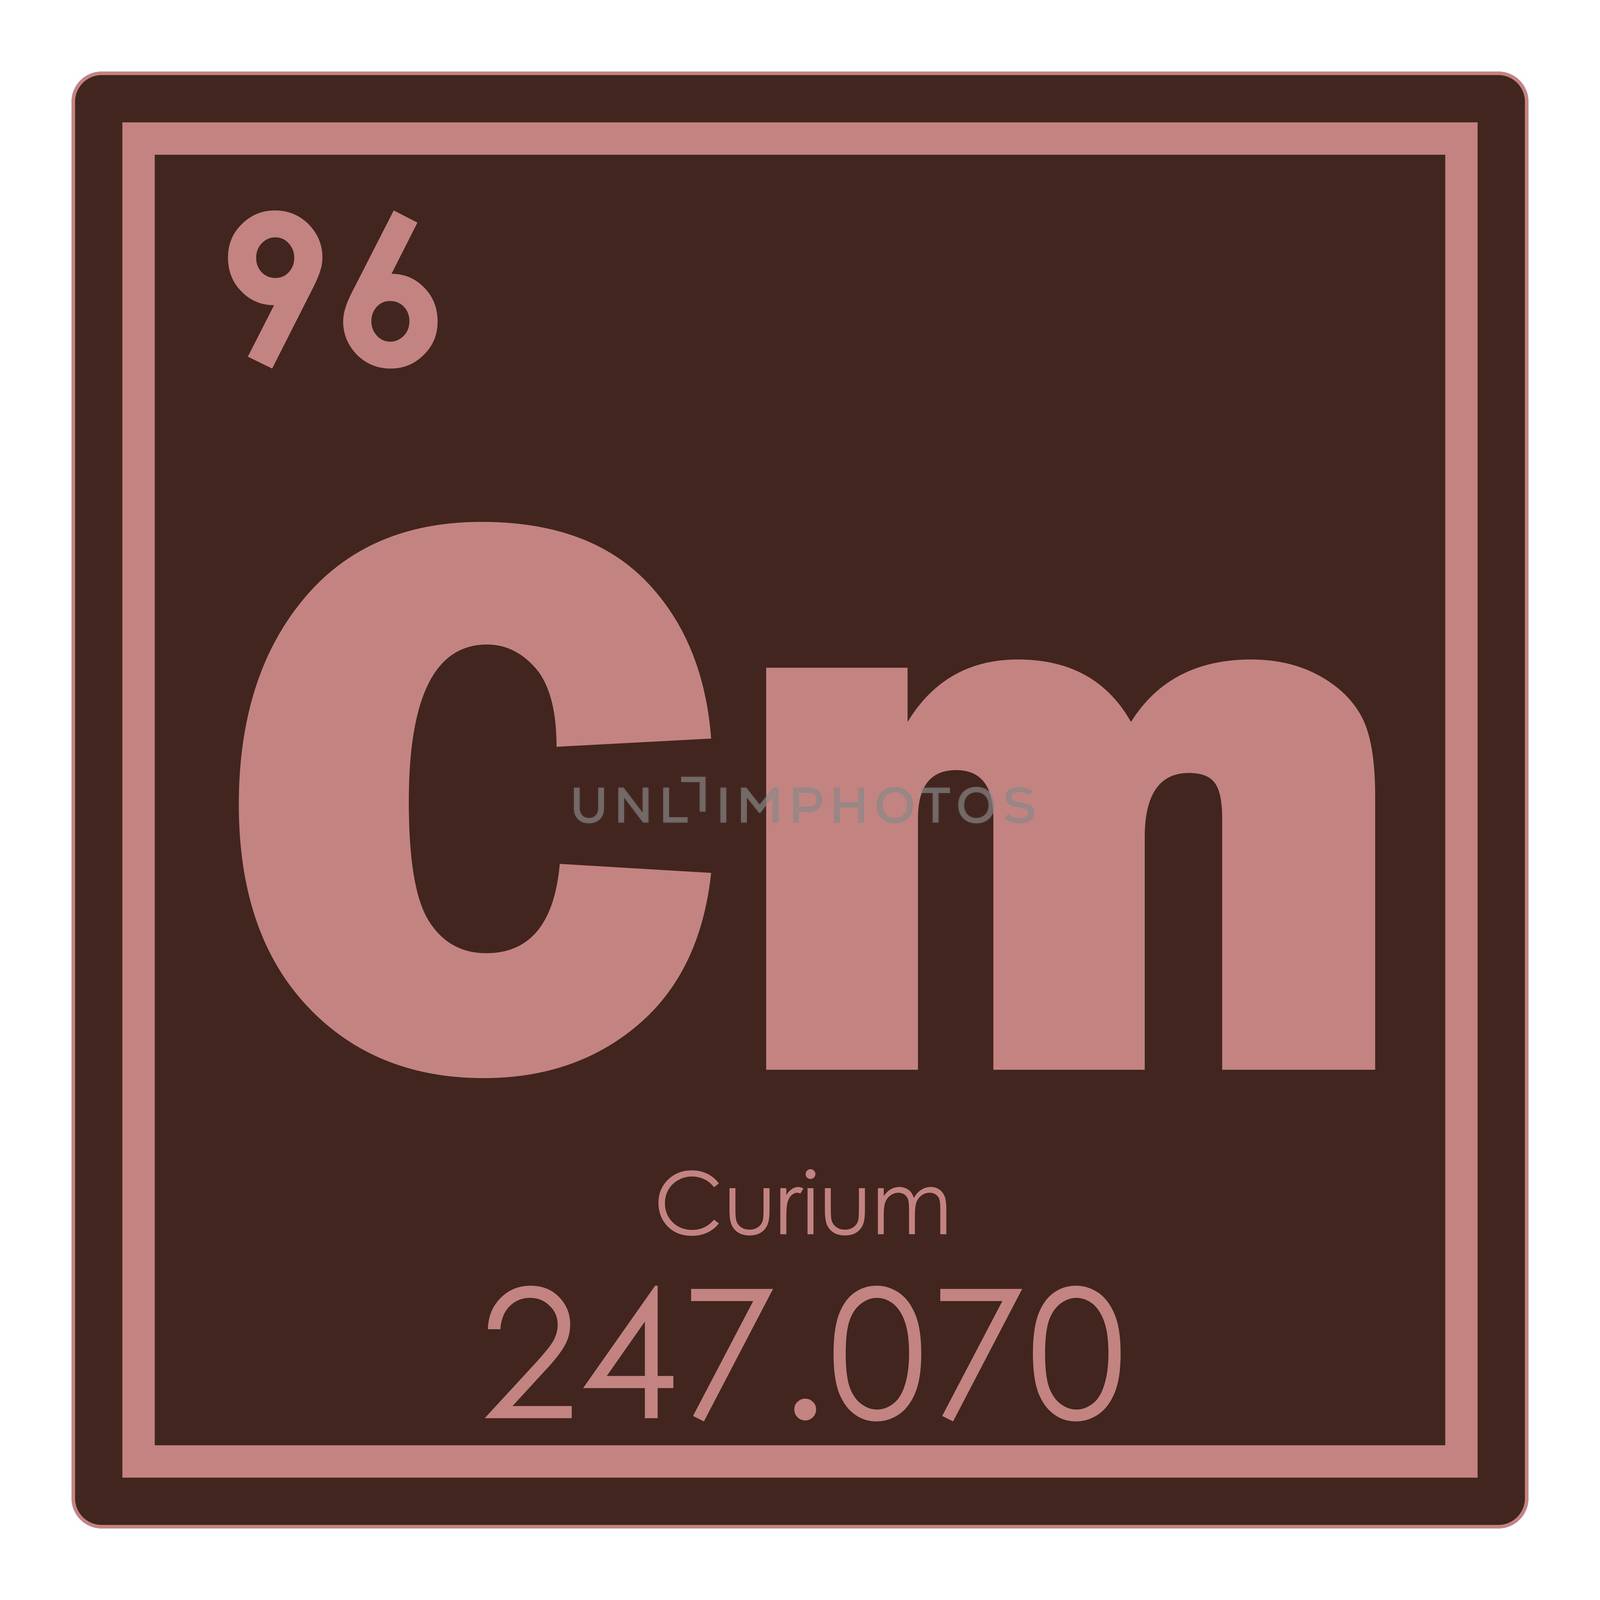 Curium chemical element by tony4urban